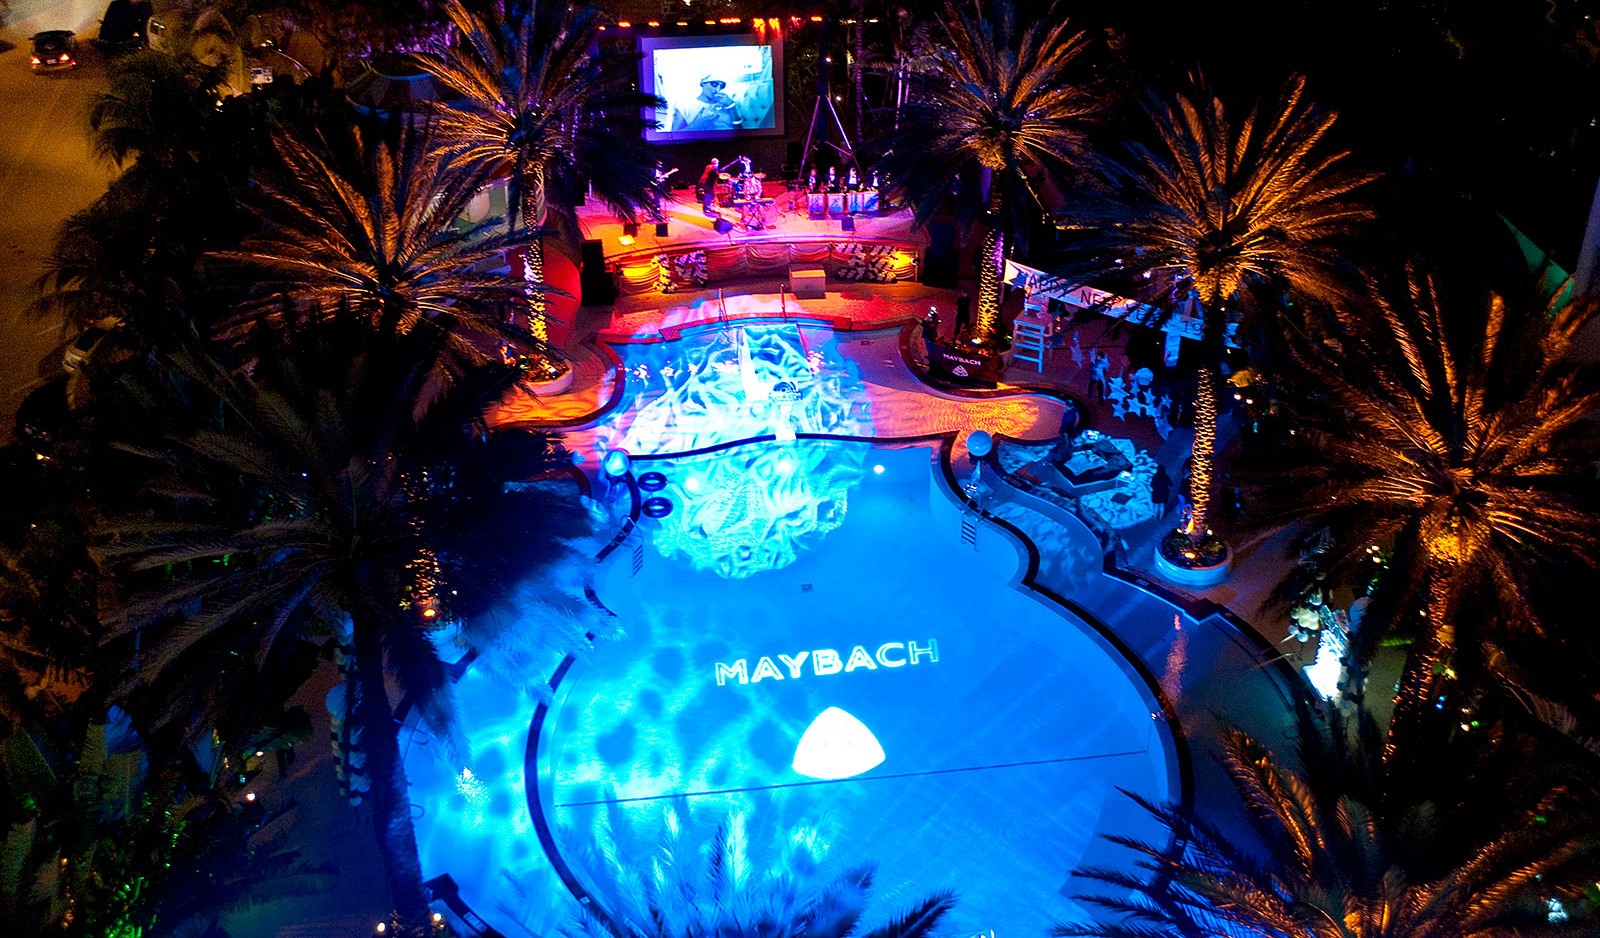 David LaChapelle | Maybach | The launch of the Maybach campaign shot by David LaChapelle at Miami Art Basel. | 7